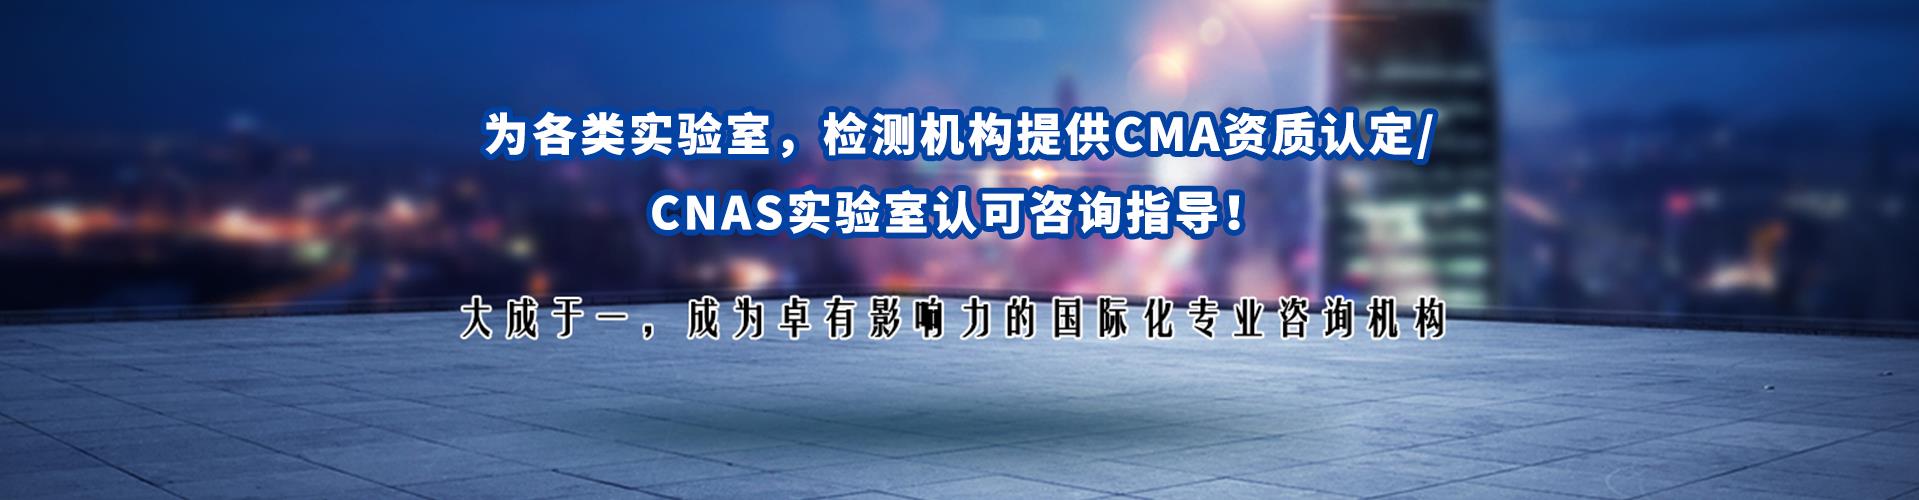 CNAS申请流程、陕西本地CNAS申请流程、陕西、陕西CNAS申请流程